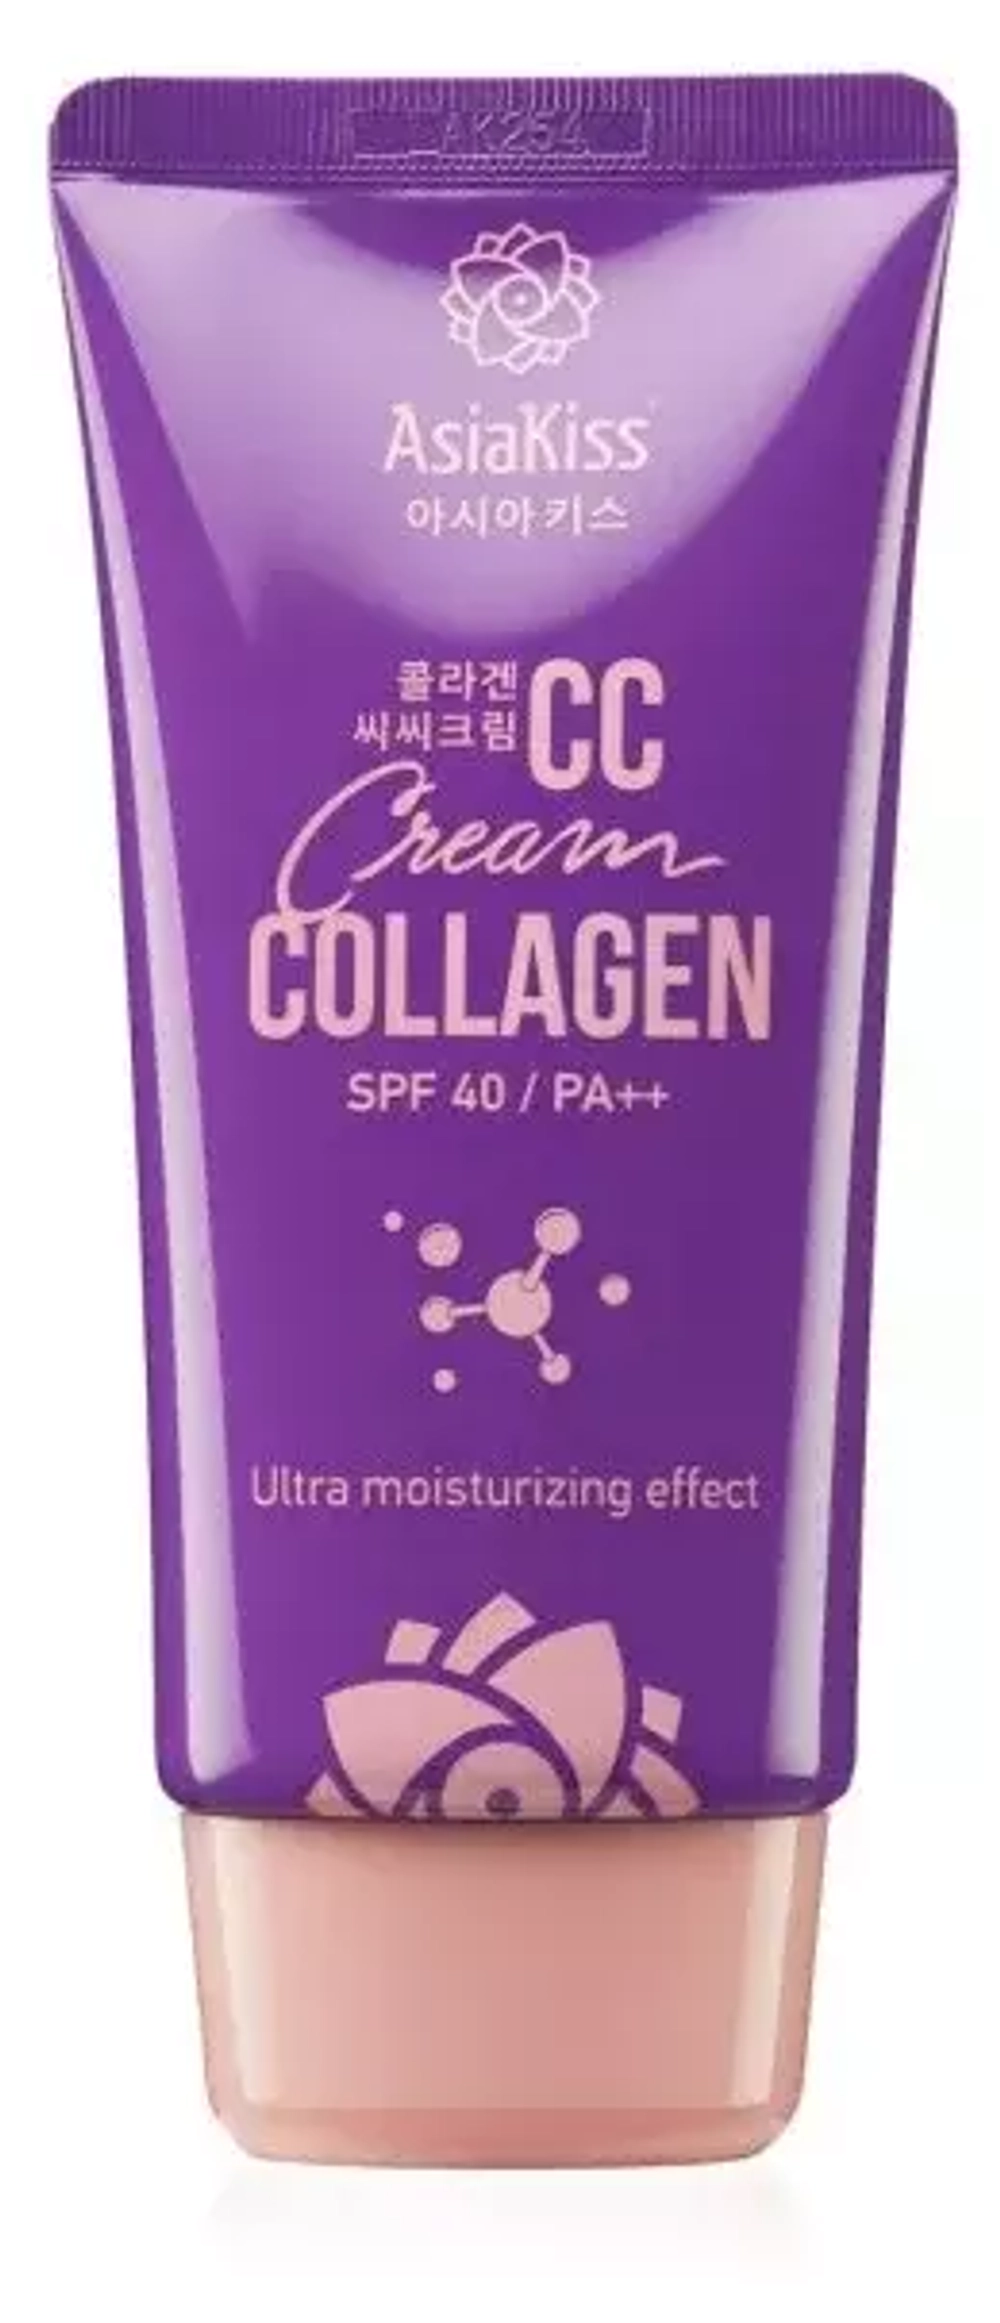 CC-крем с коллагеном AsiaKiss Collagen CC cream, 60 мл